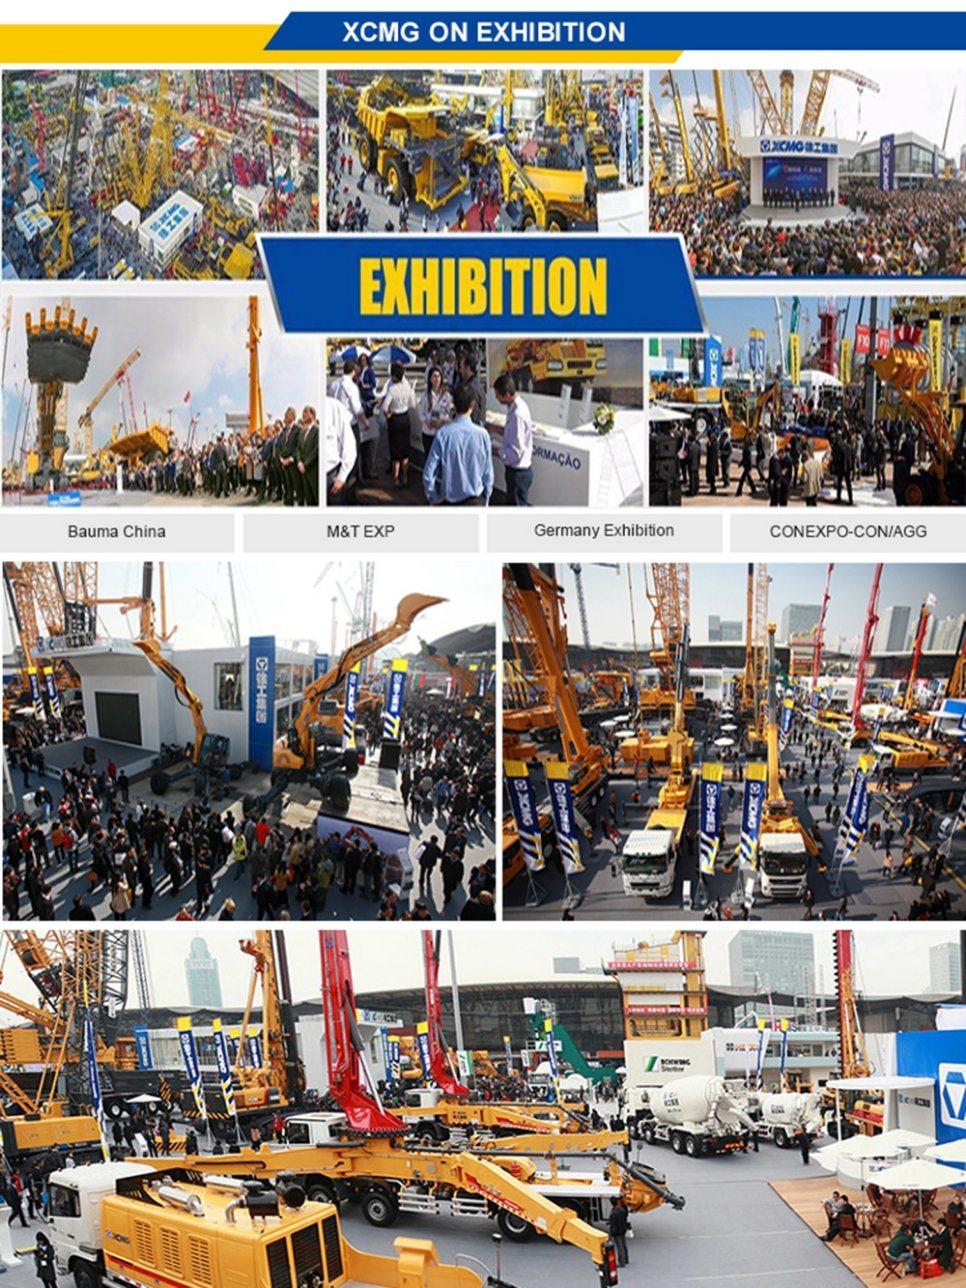 XCMG Brand Excavator Machinery 1 Ton-7000 Ton Excavator China Top Excavator Machine with Excavator Parts for Sale